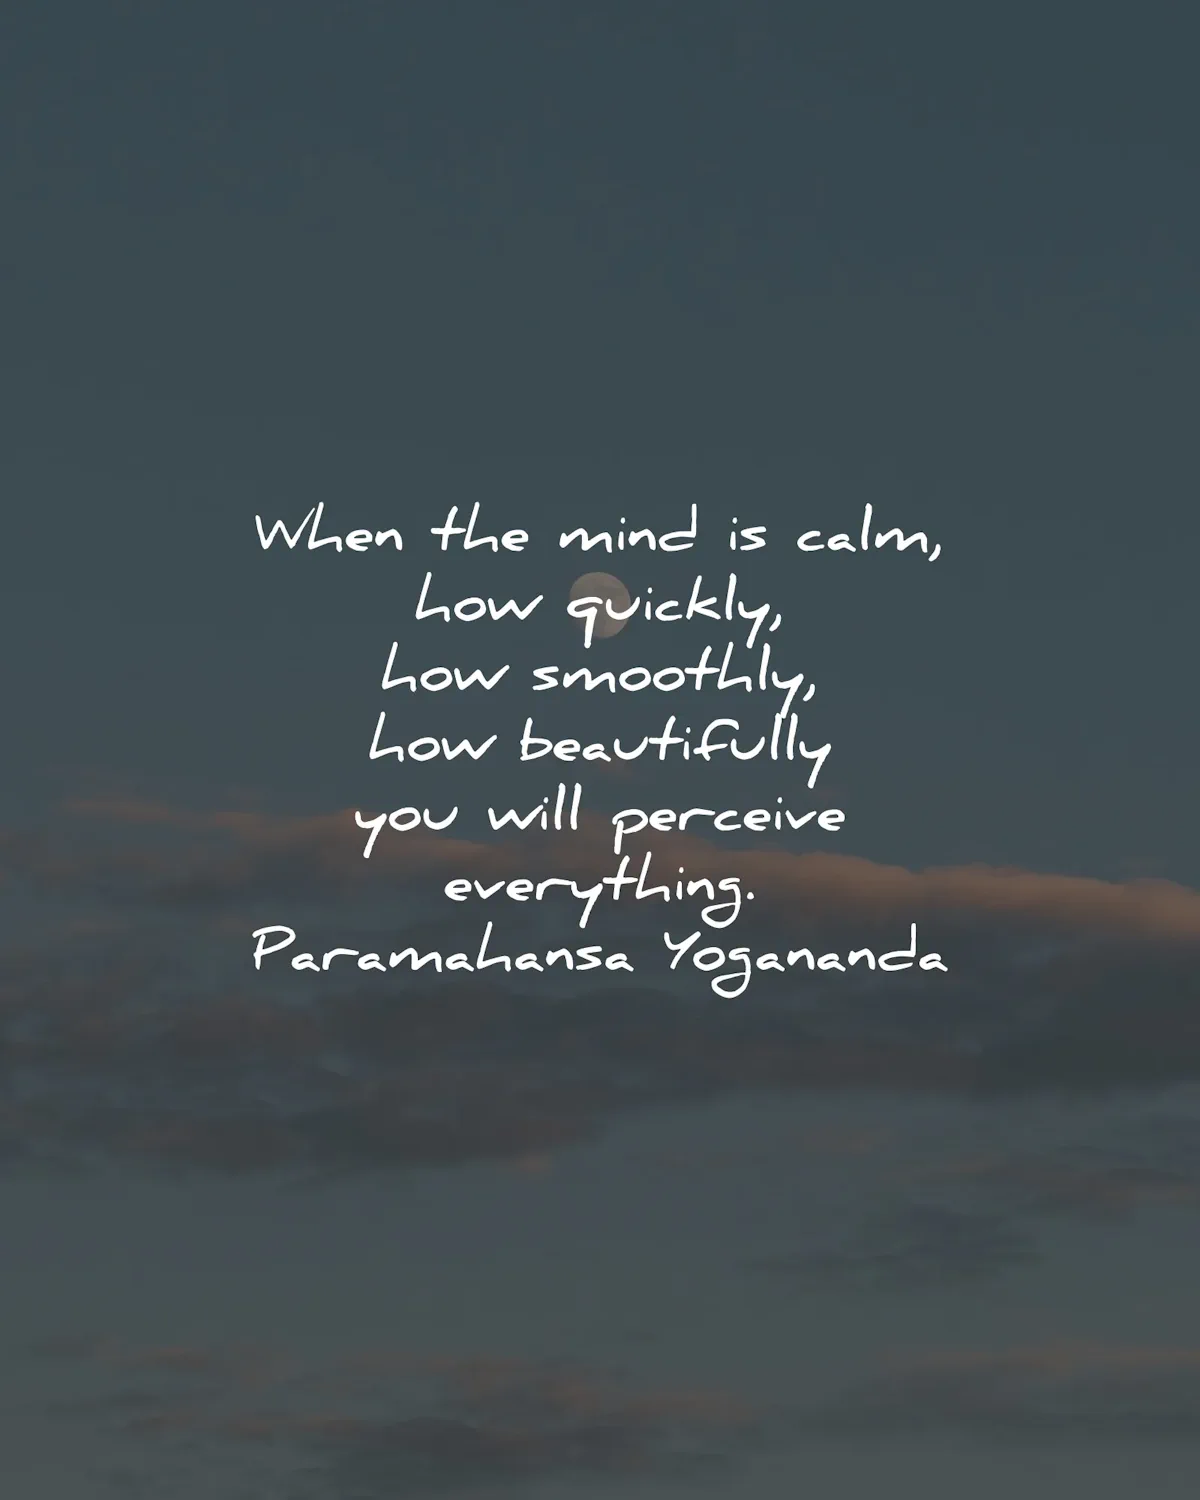 calm quotes mind quickly smoothly perceive paramahansa yogananda wisdom